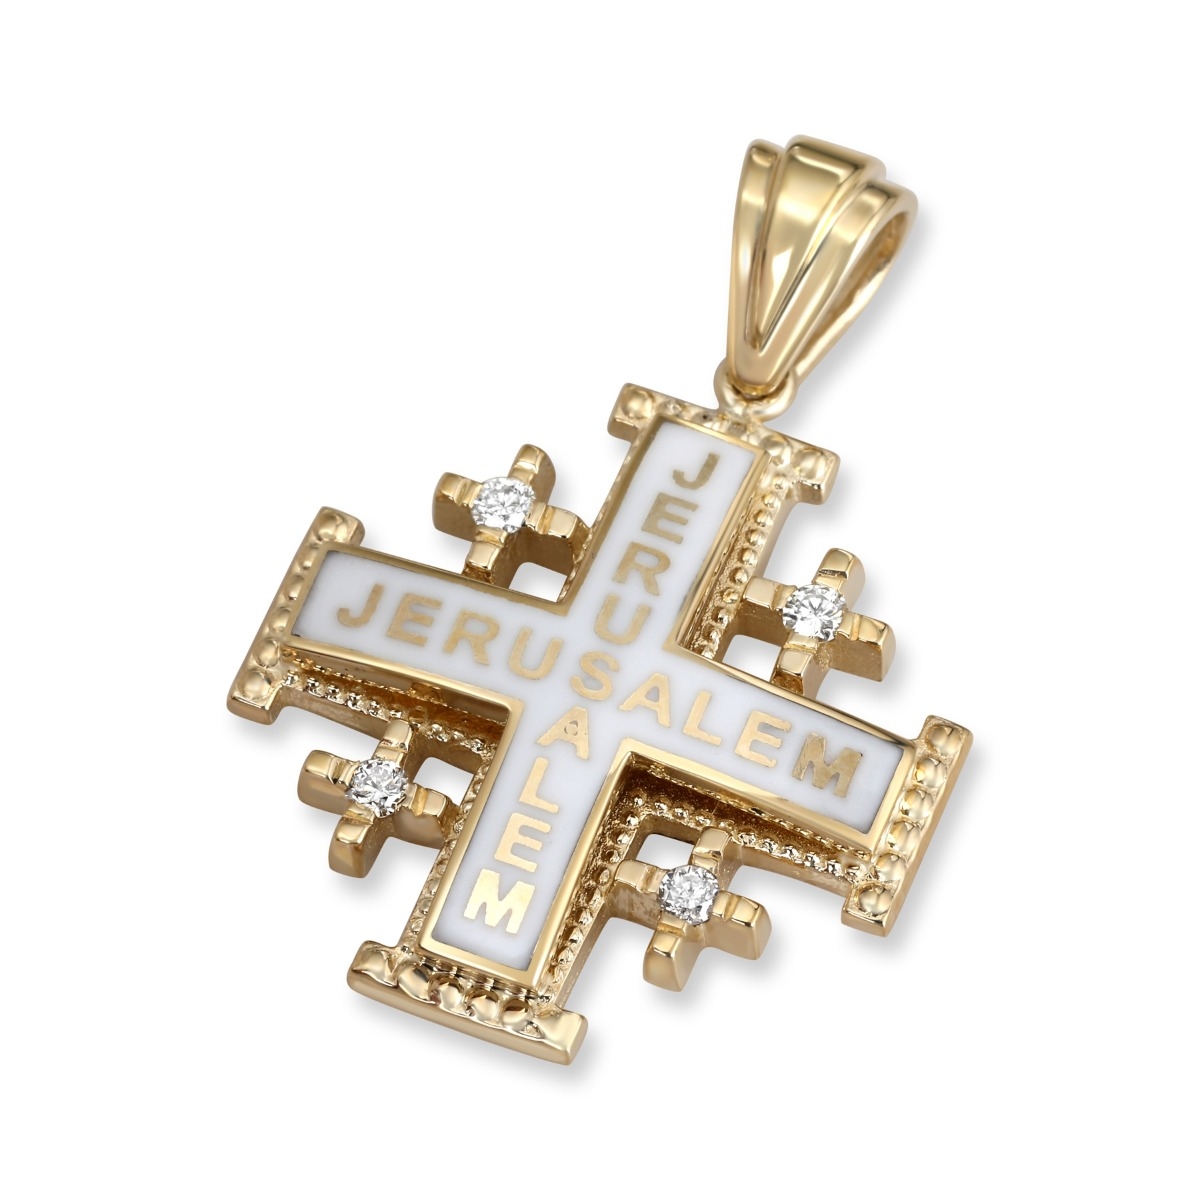 Anbinder Jewelry 14K Yellow Gold Diamond and White Enamel Classic Milgrain Jerusalem Cross Pendant with Jerusalem Inscription and 4 Diamonds - 1